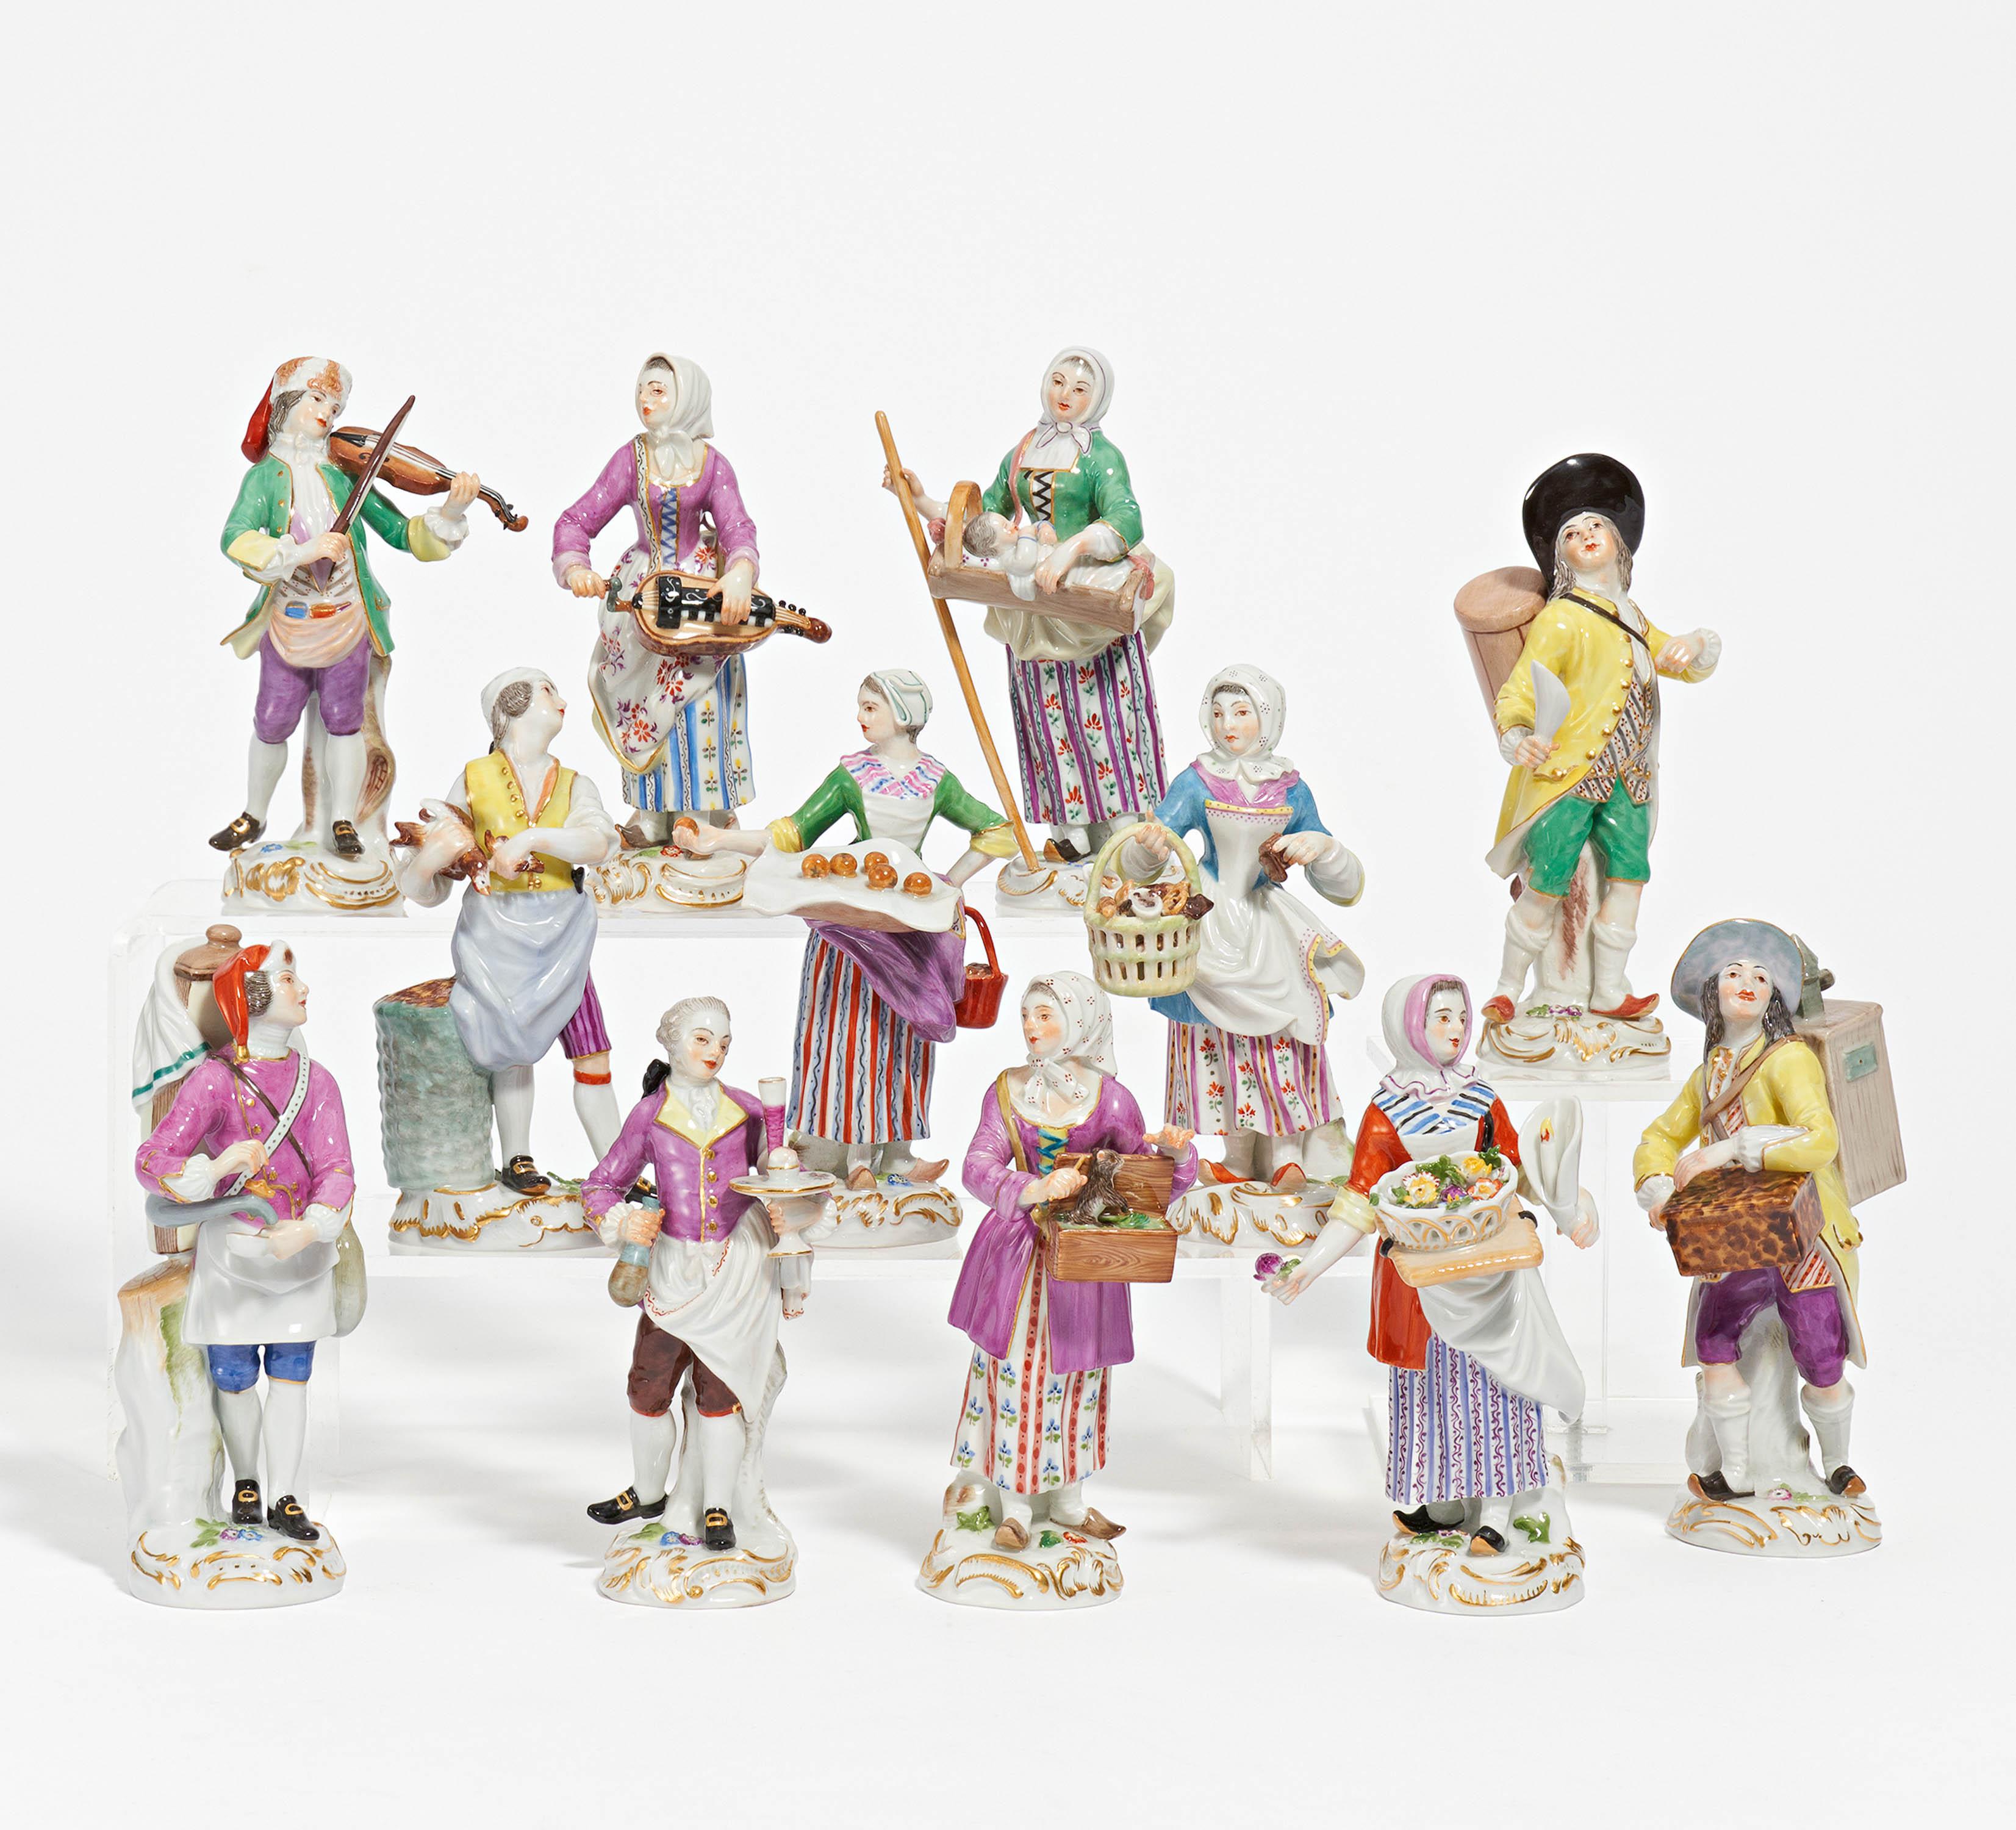 12 figurines from a series "Cris de Paris"